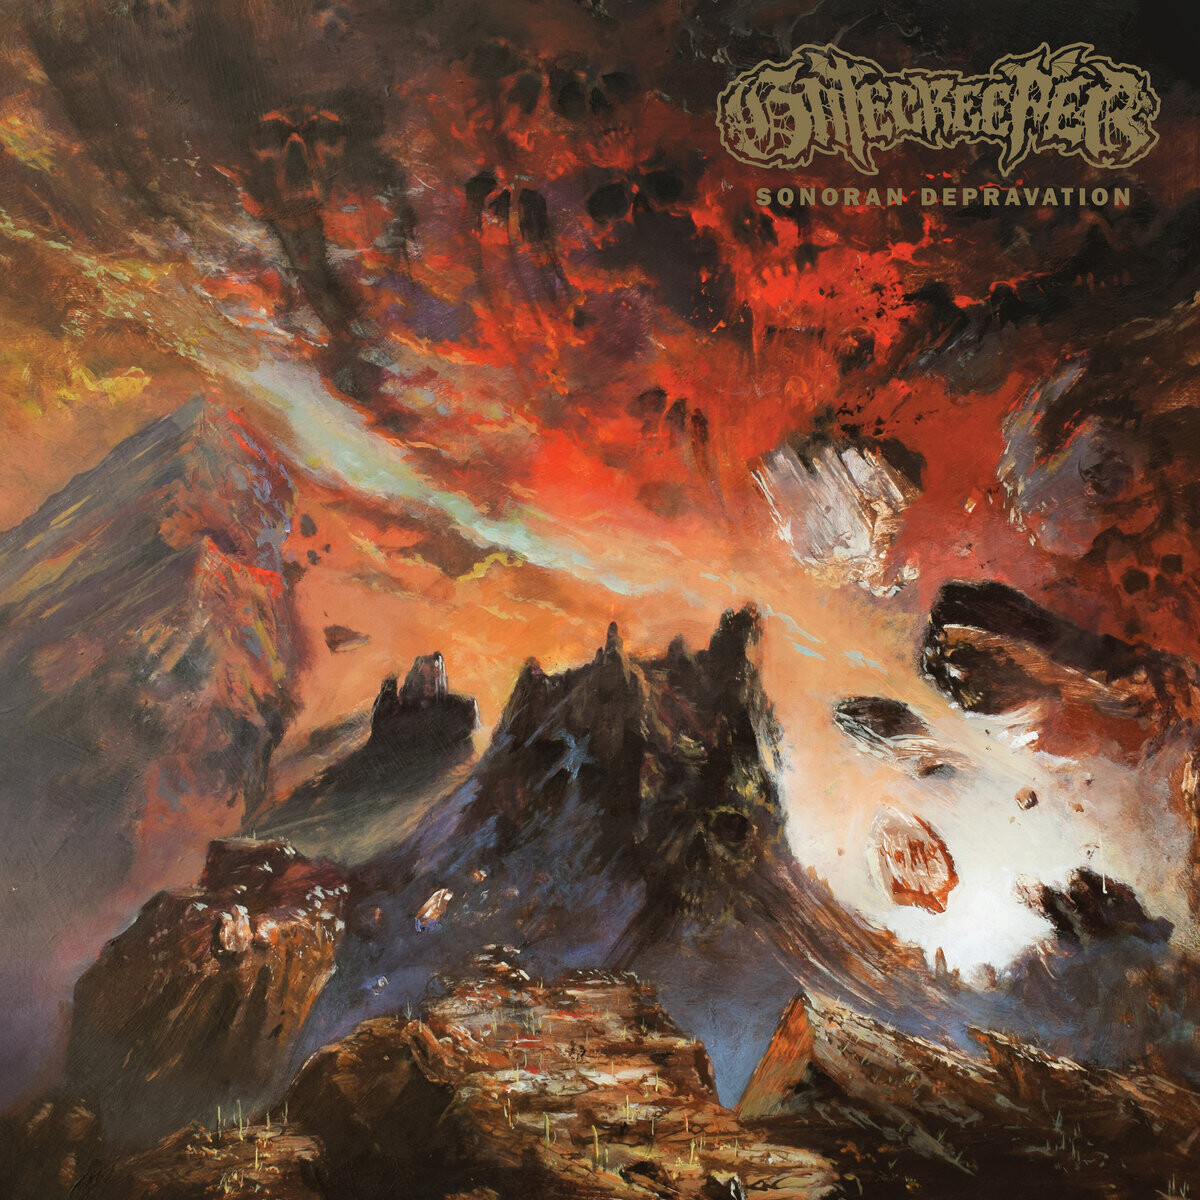 Gatecreeper - Sonoran Depravation LP (Black Ice "Ghosty Effect" Vinyl)